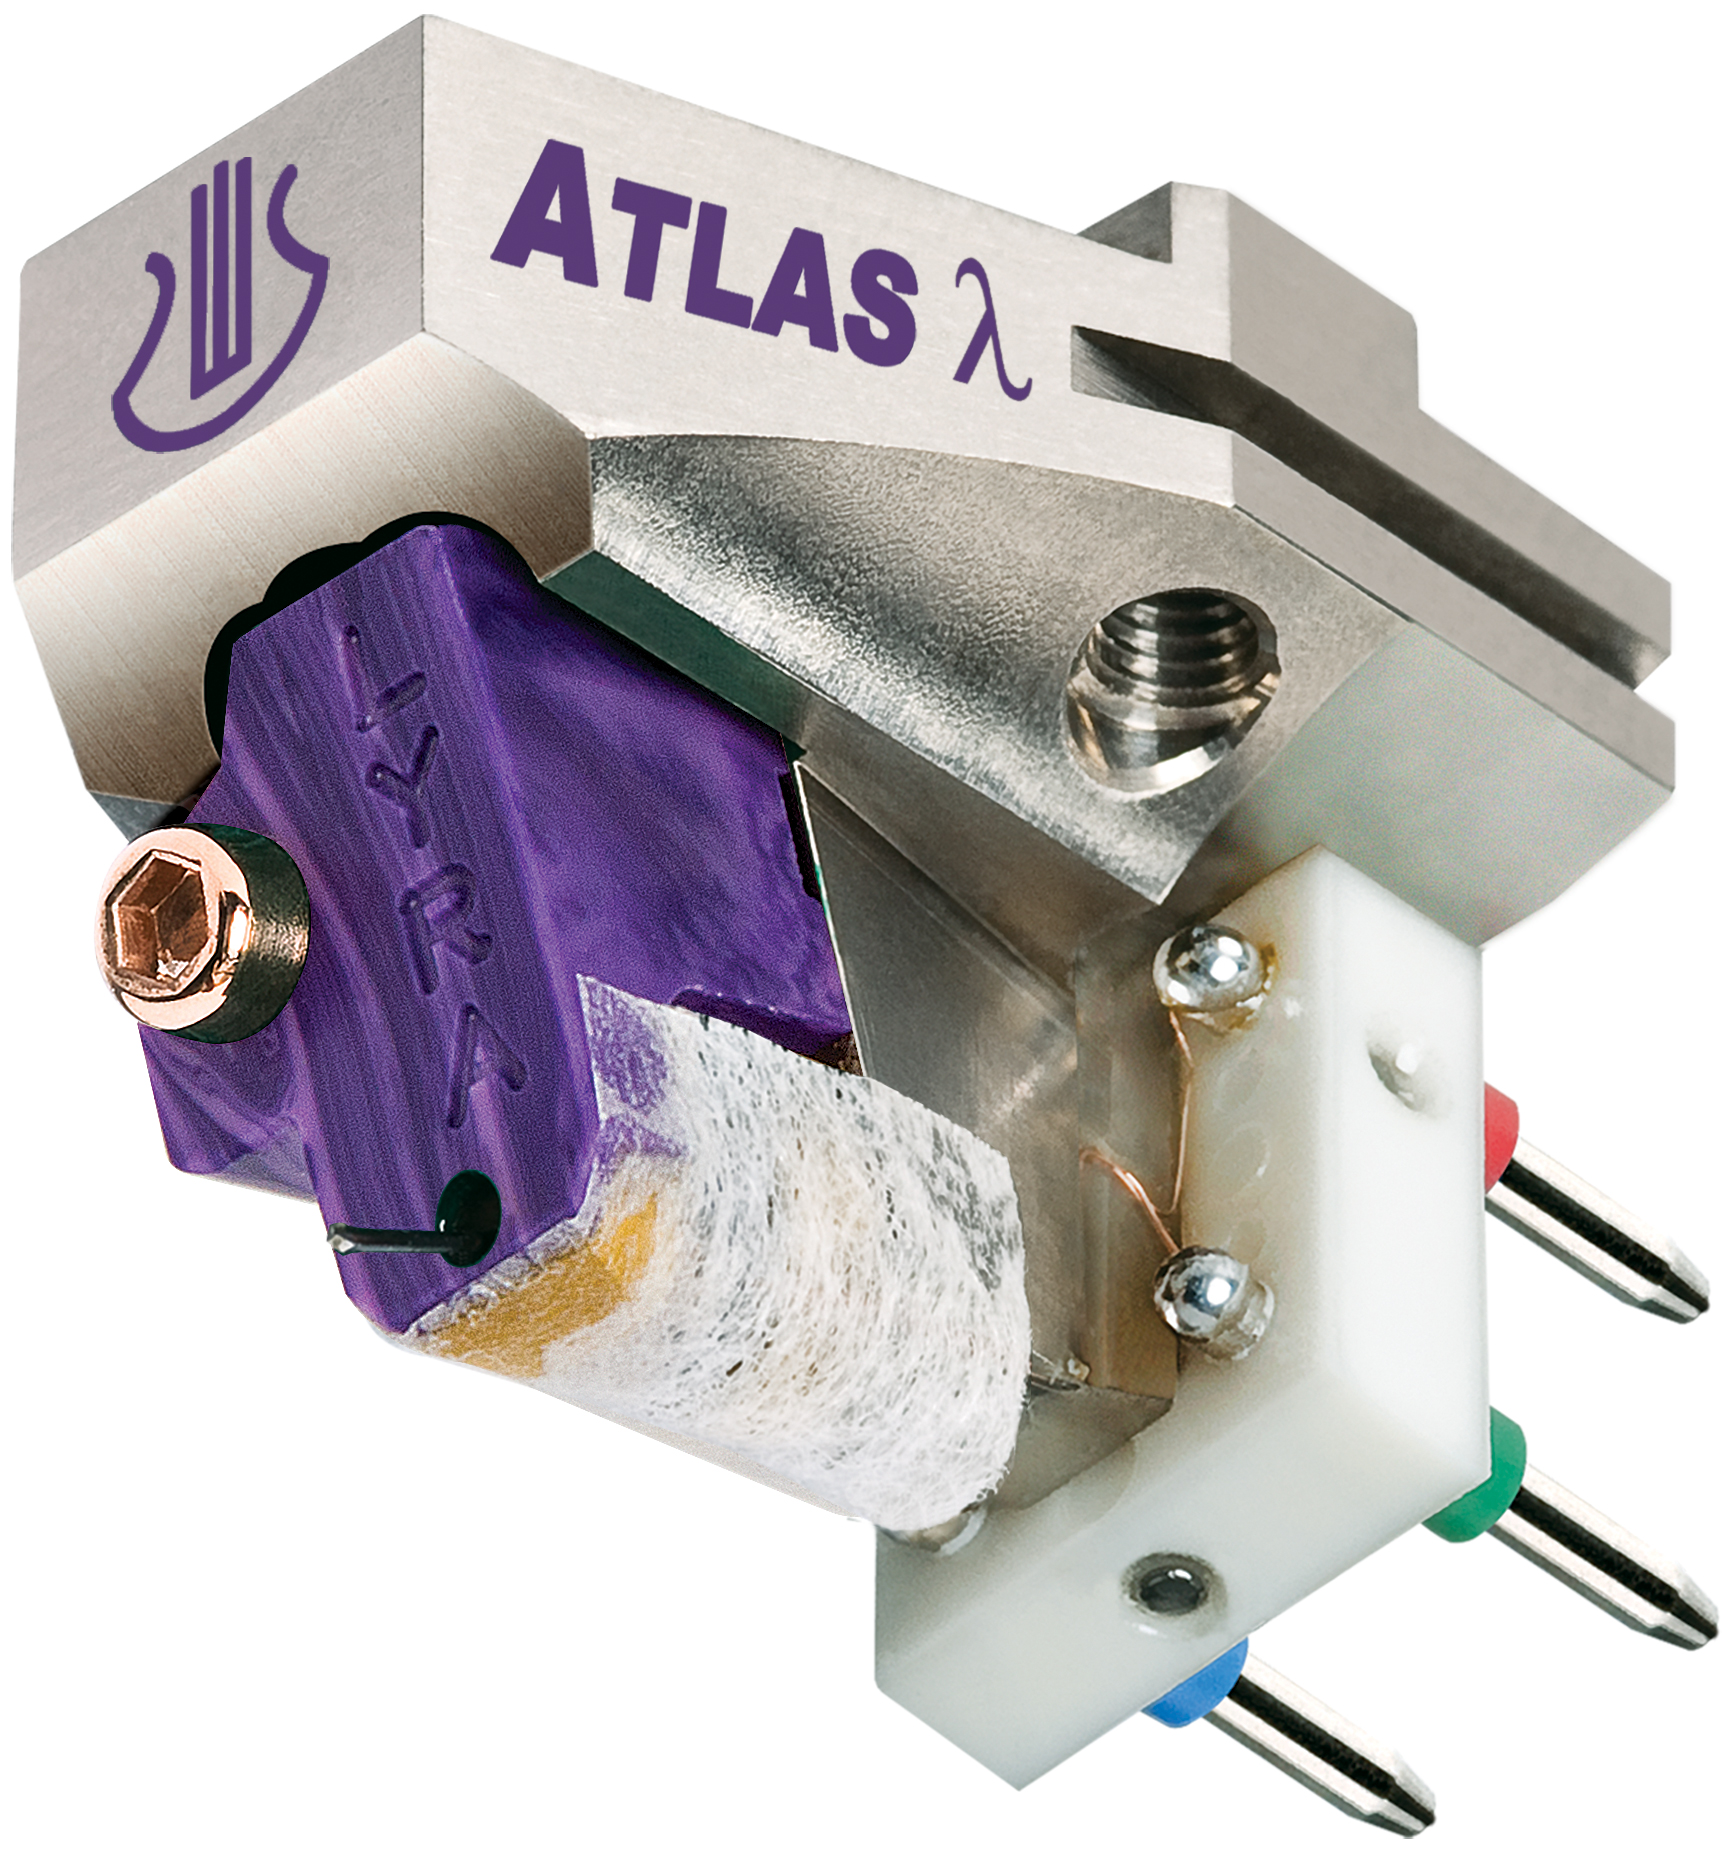 Lyra Atlas Lambda SL moving-coil cartridge Review - Dagogo